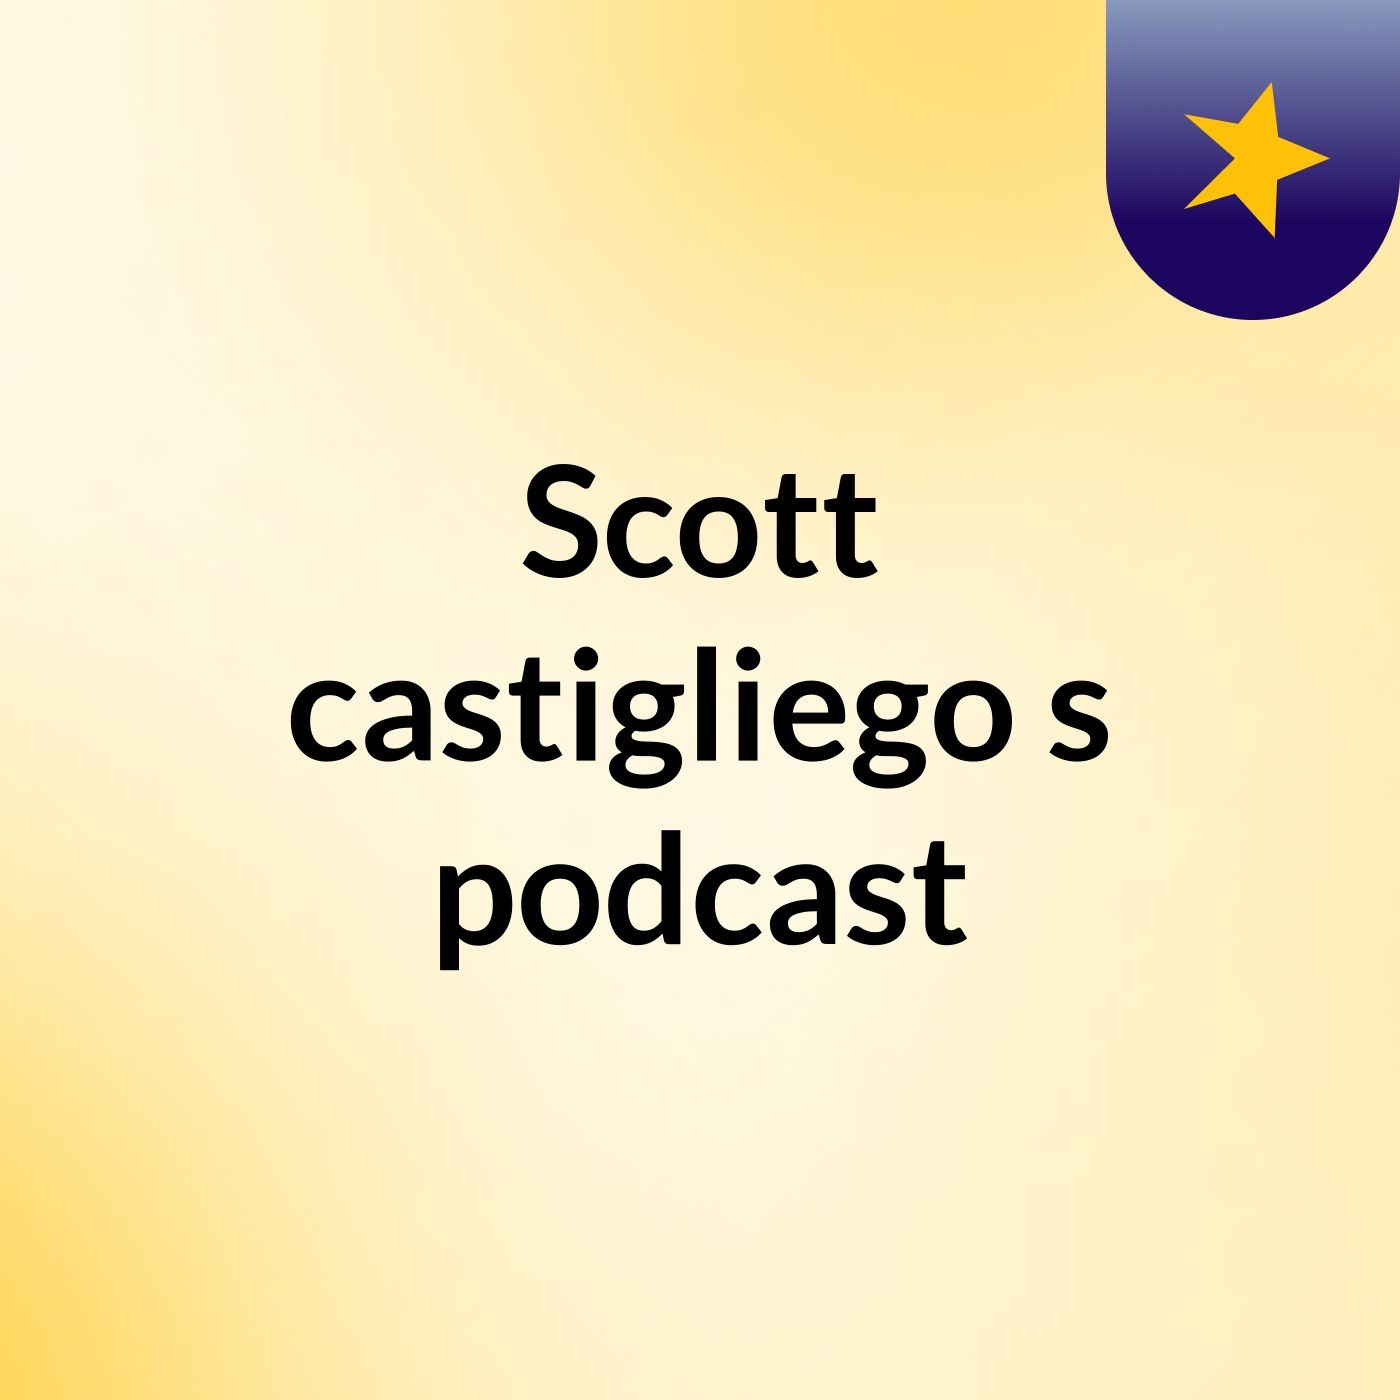 Scott castigliego's podcast